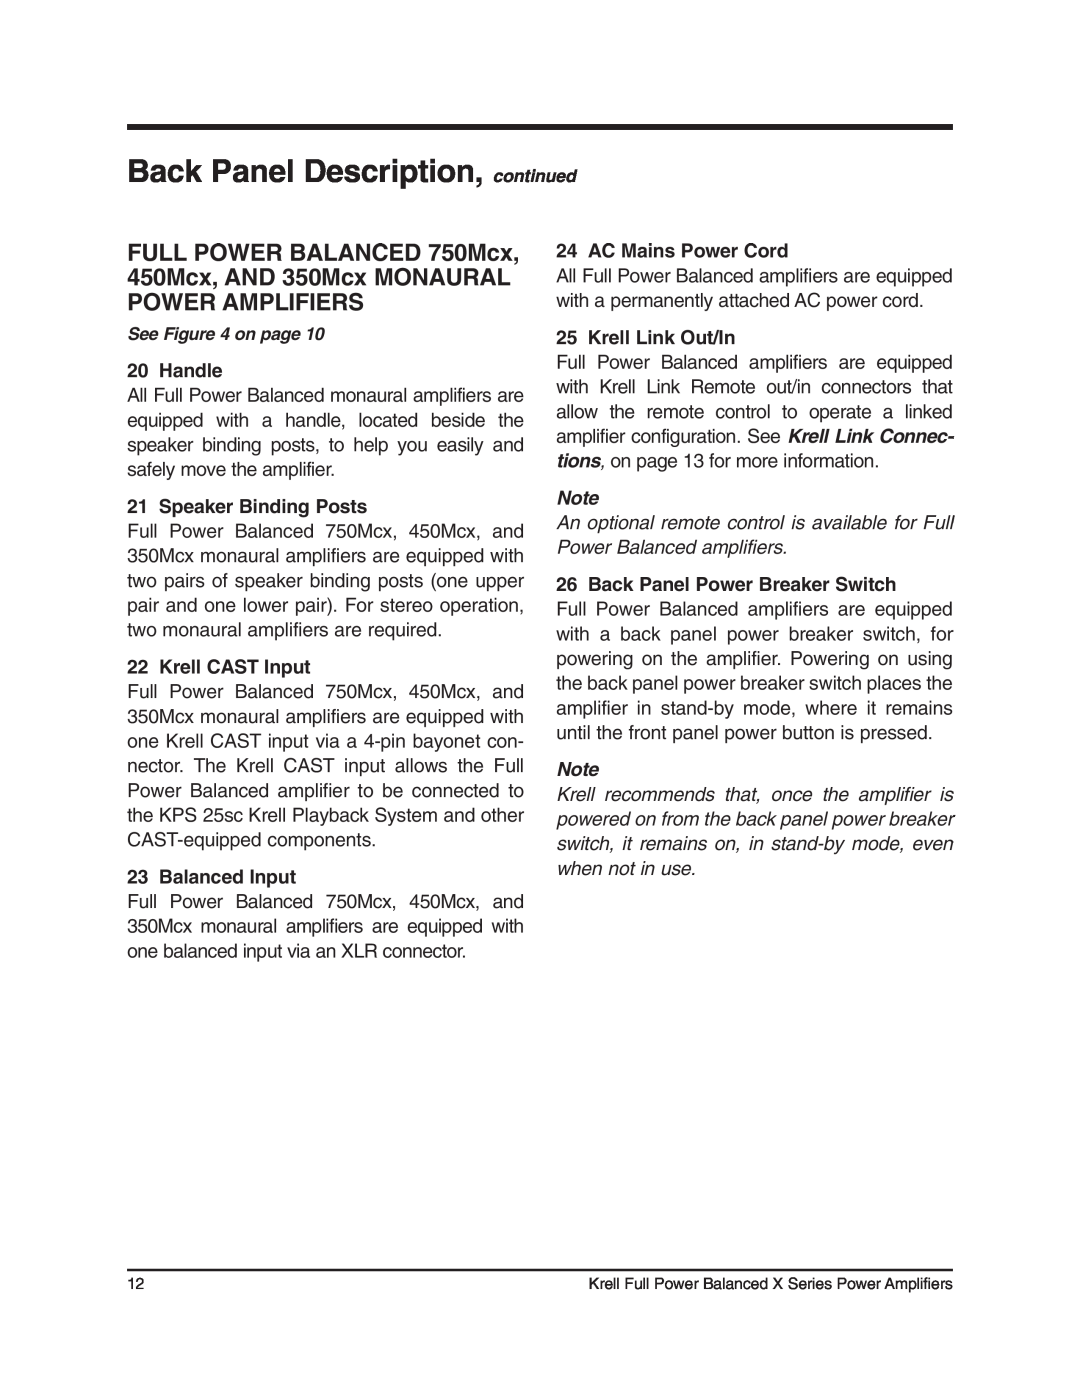 Krell Industries 450Mcx manual Back Panel Description, continued, FULL POWER BALANCED 750Mcx, Handle, Speaker Binding Posts 